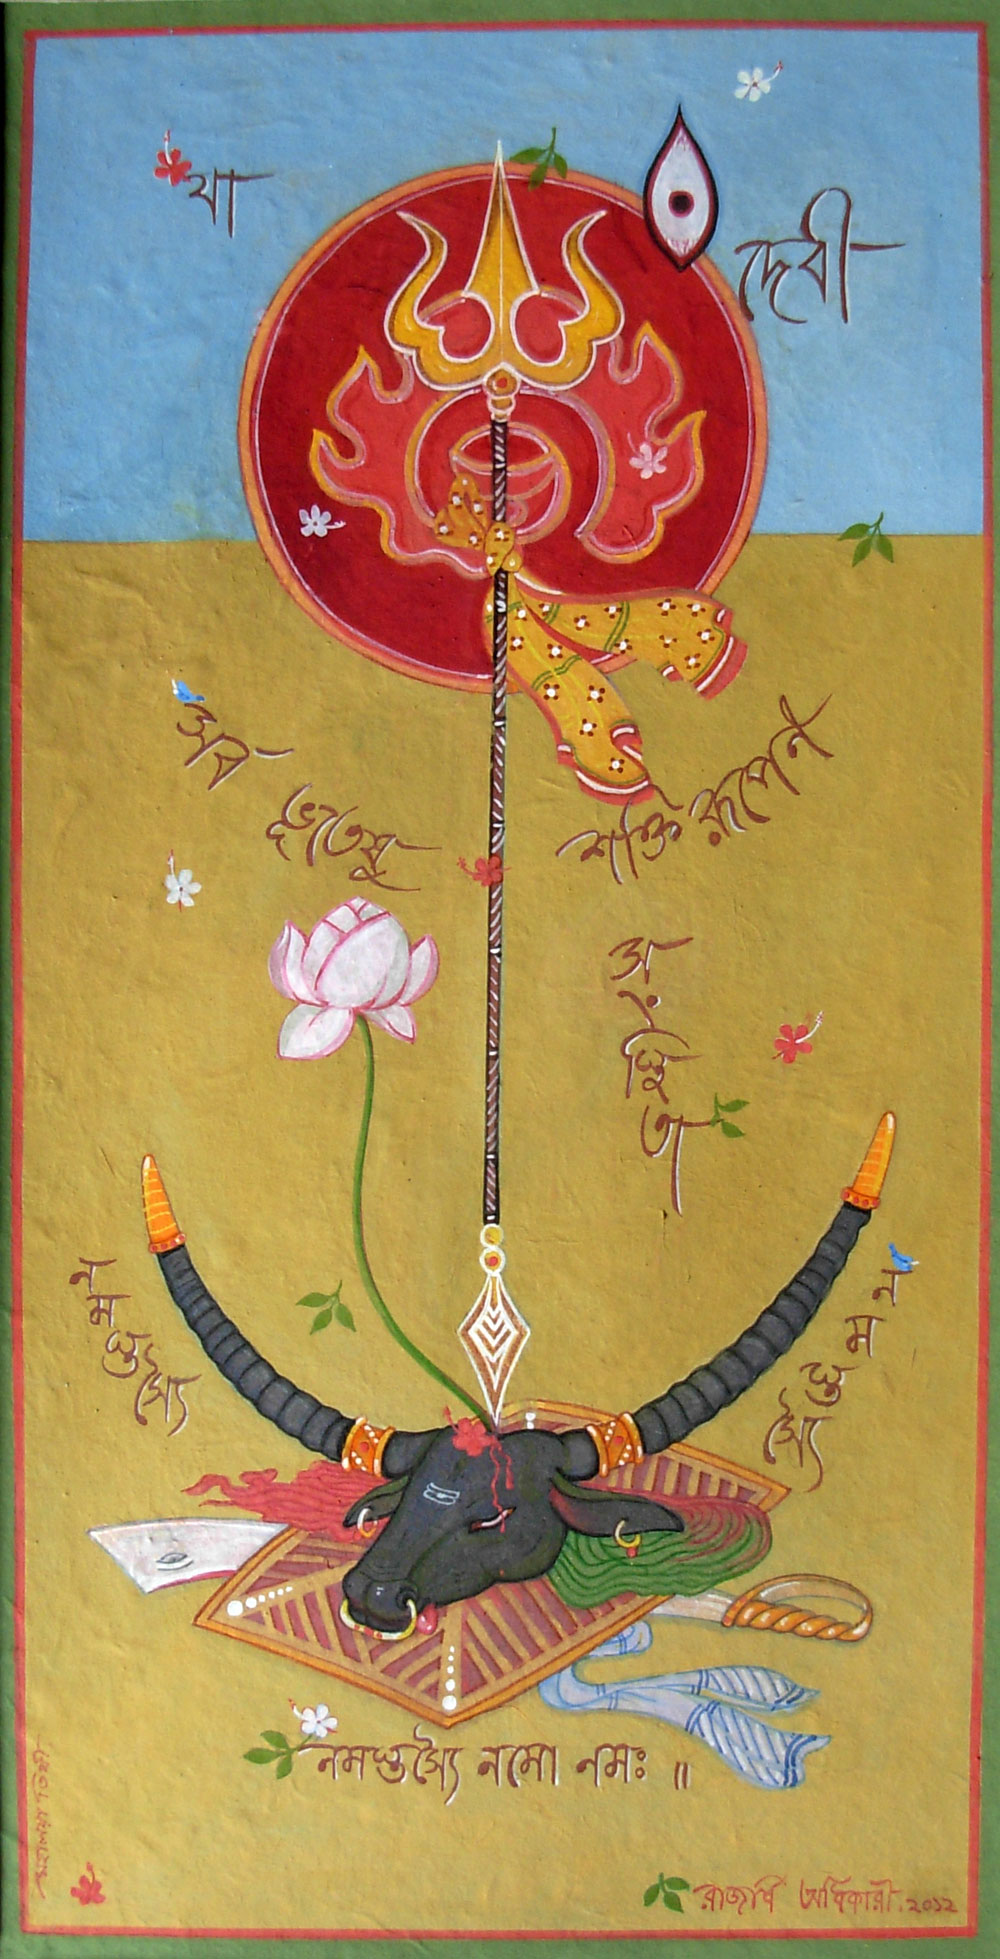 Mahishasur painting on paper